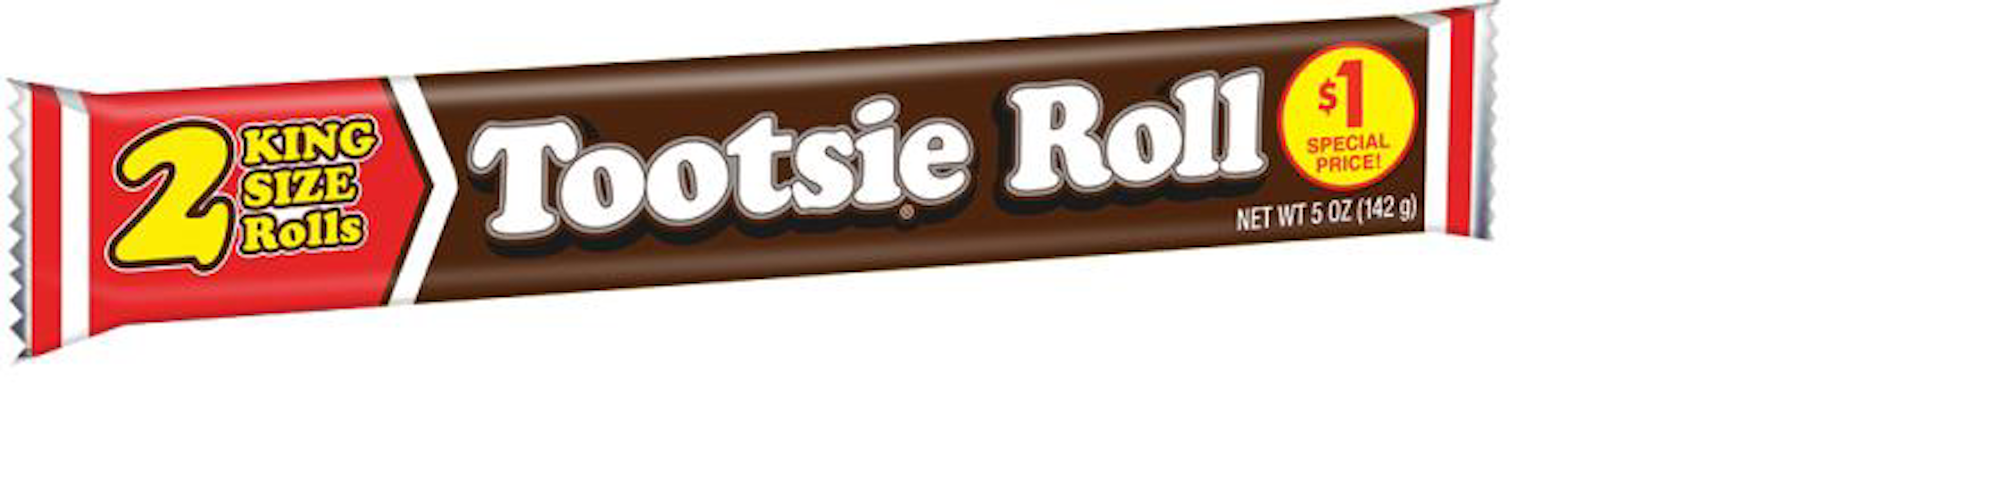 Tootsie Roll. Tootsie Roll industries, Inc.. Tootsie Roll плакат. Тутси ролл коктейль.